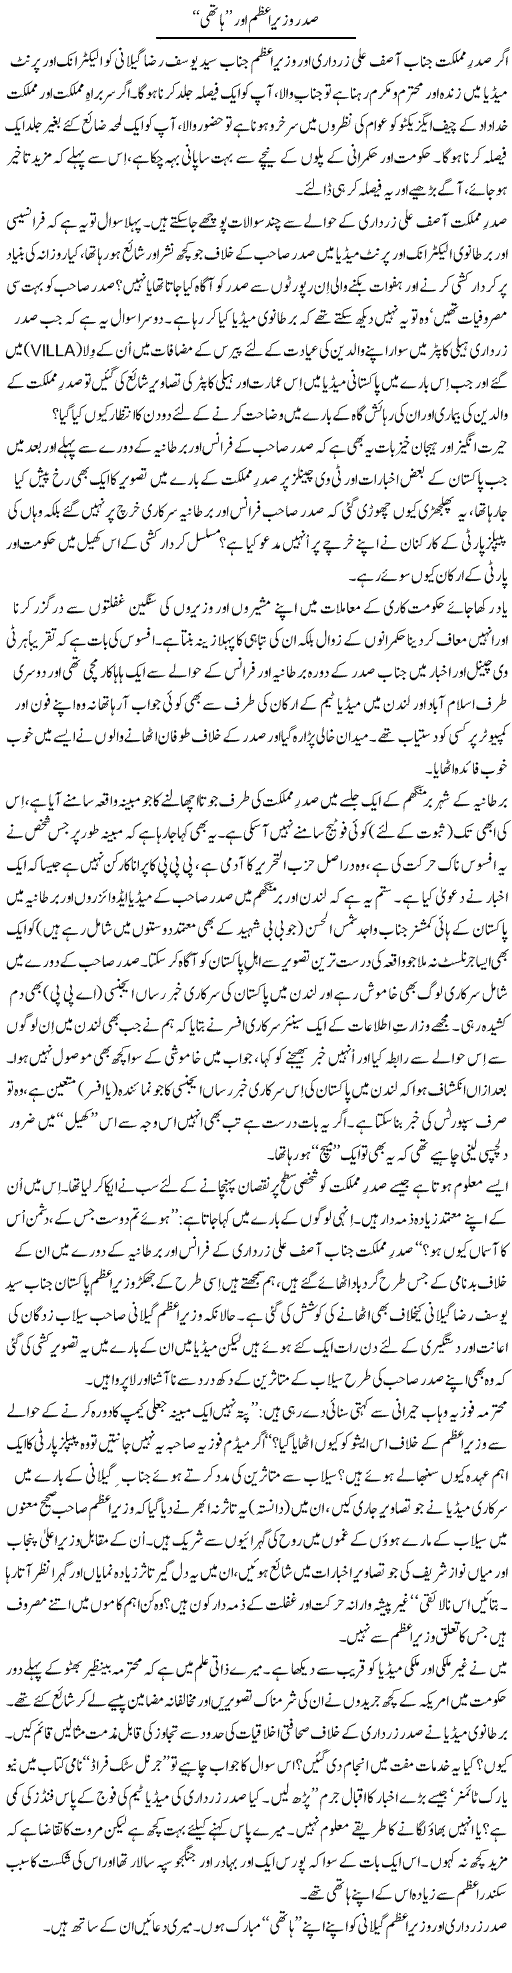 Zardari Geelani Hati Express Column Tanvir Qasir 11 August 2010